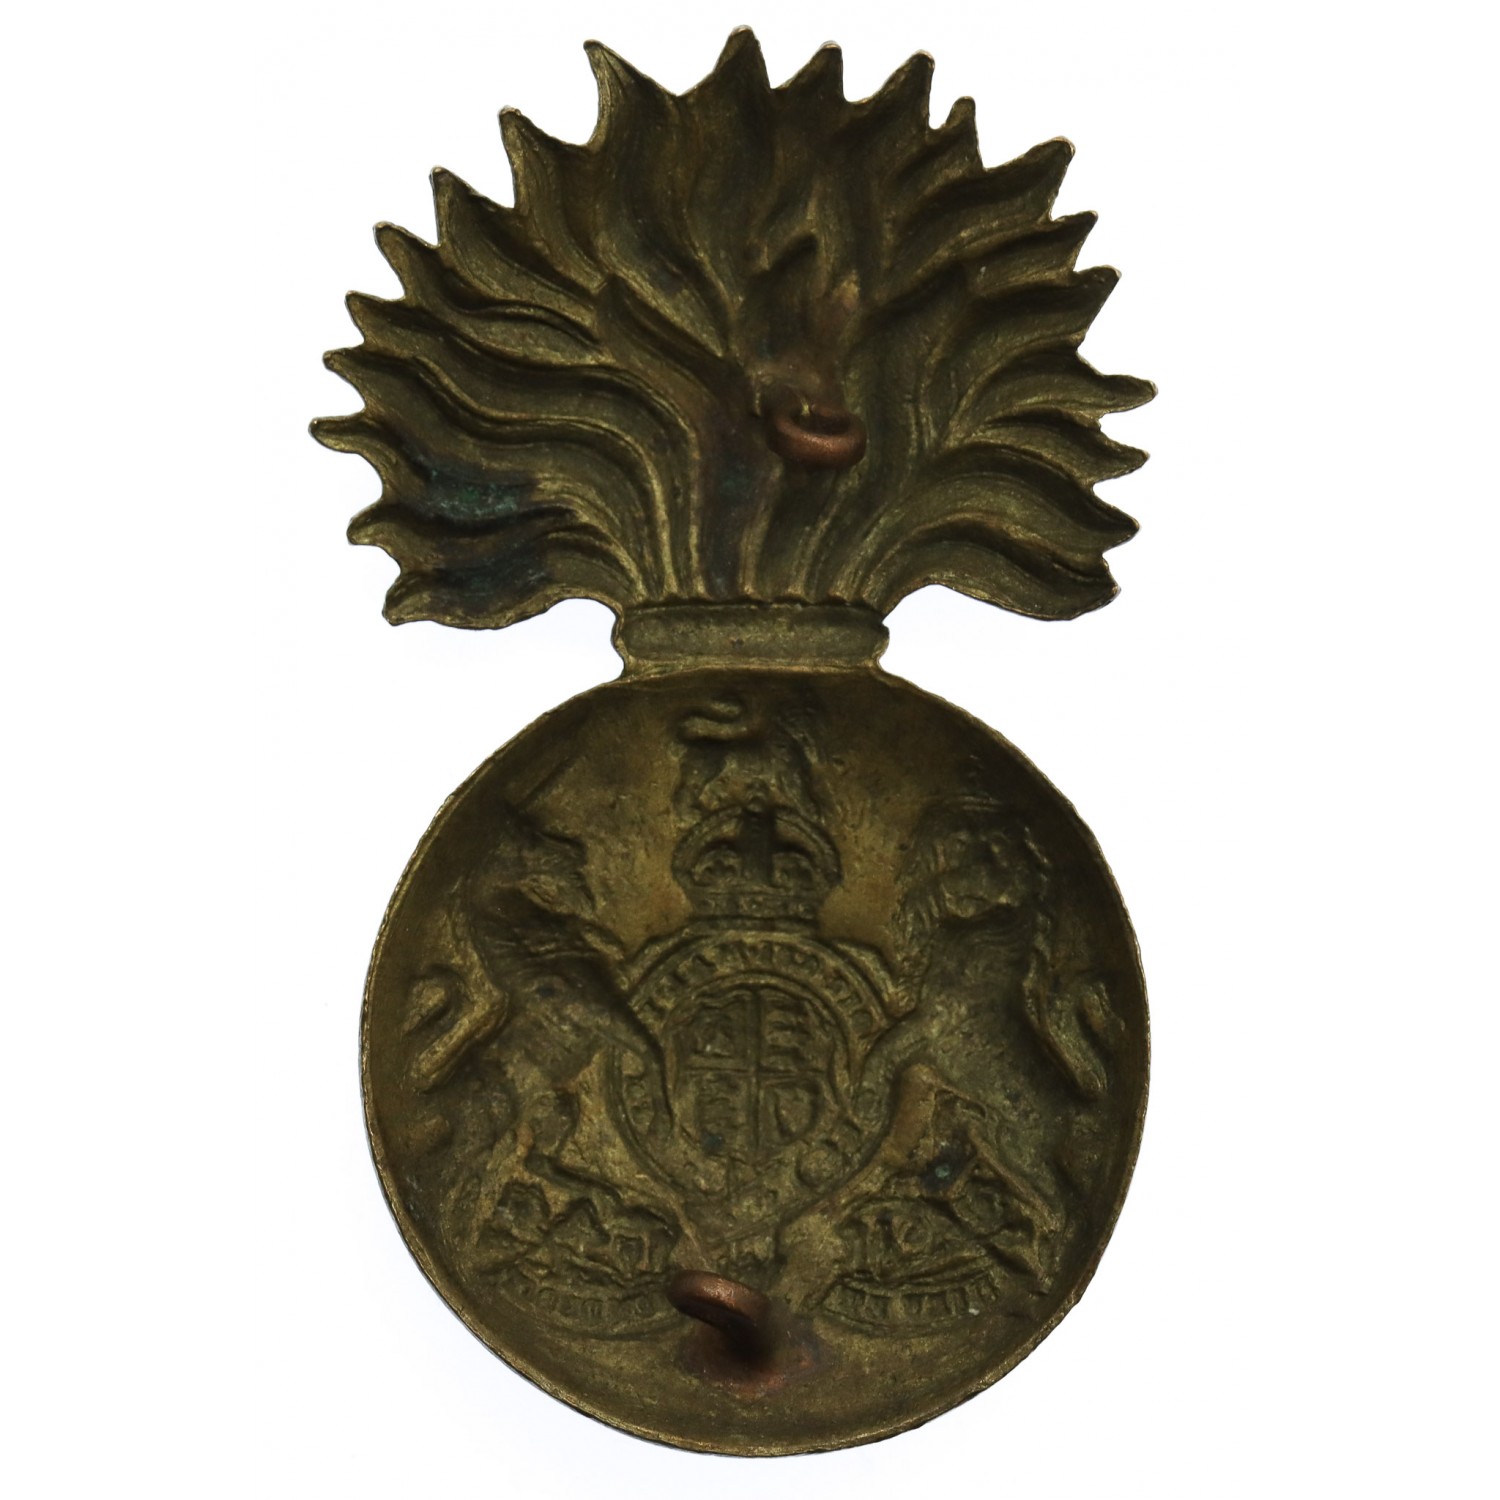 Royal Scots Fusiliers Cap Badge - King's Crown